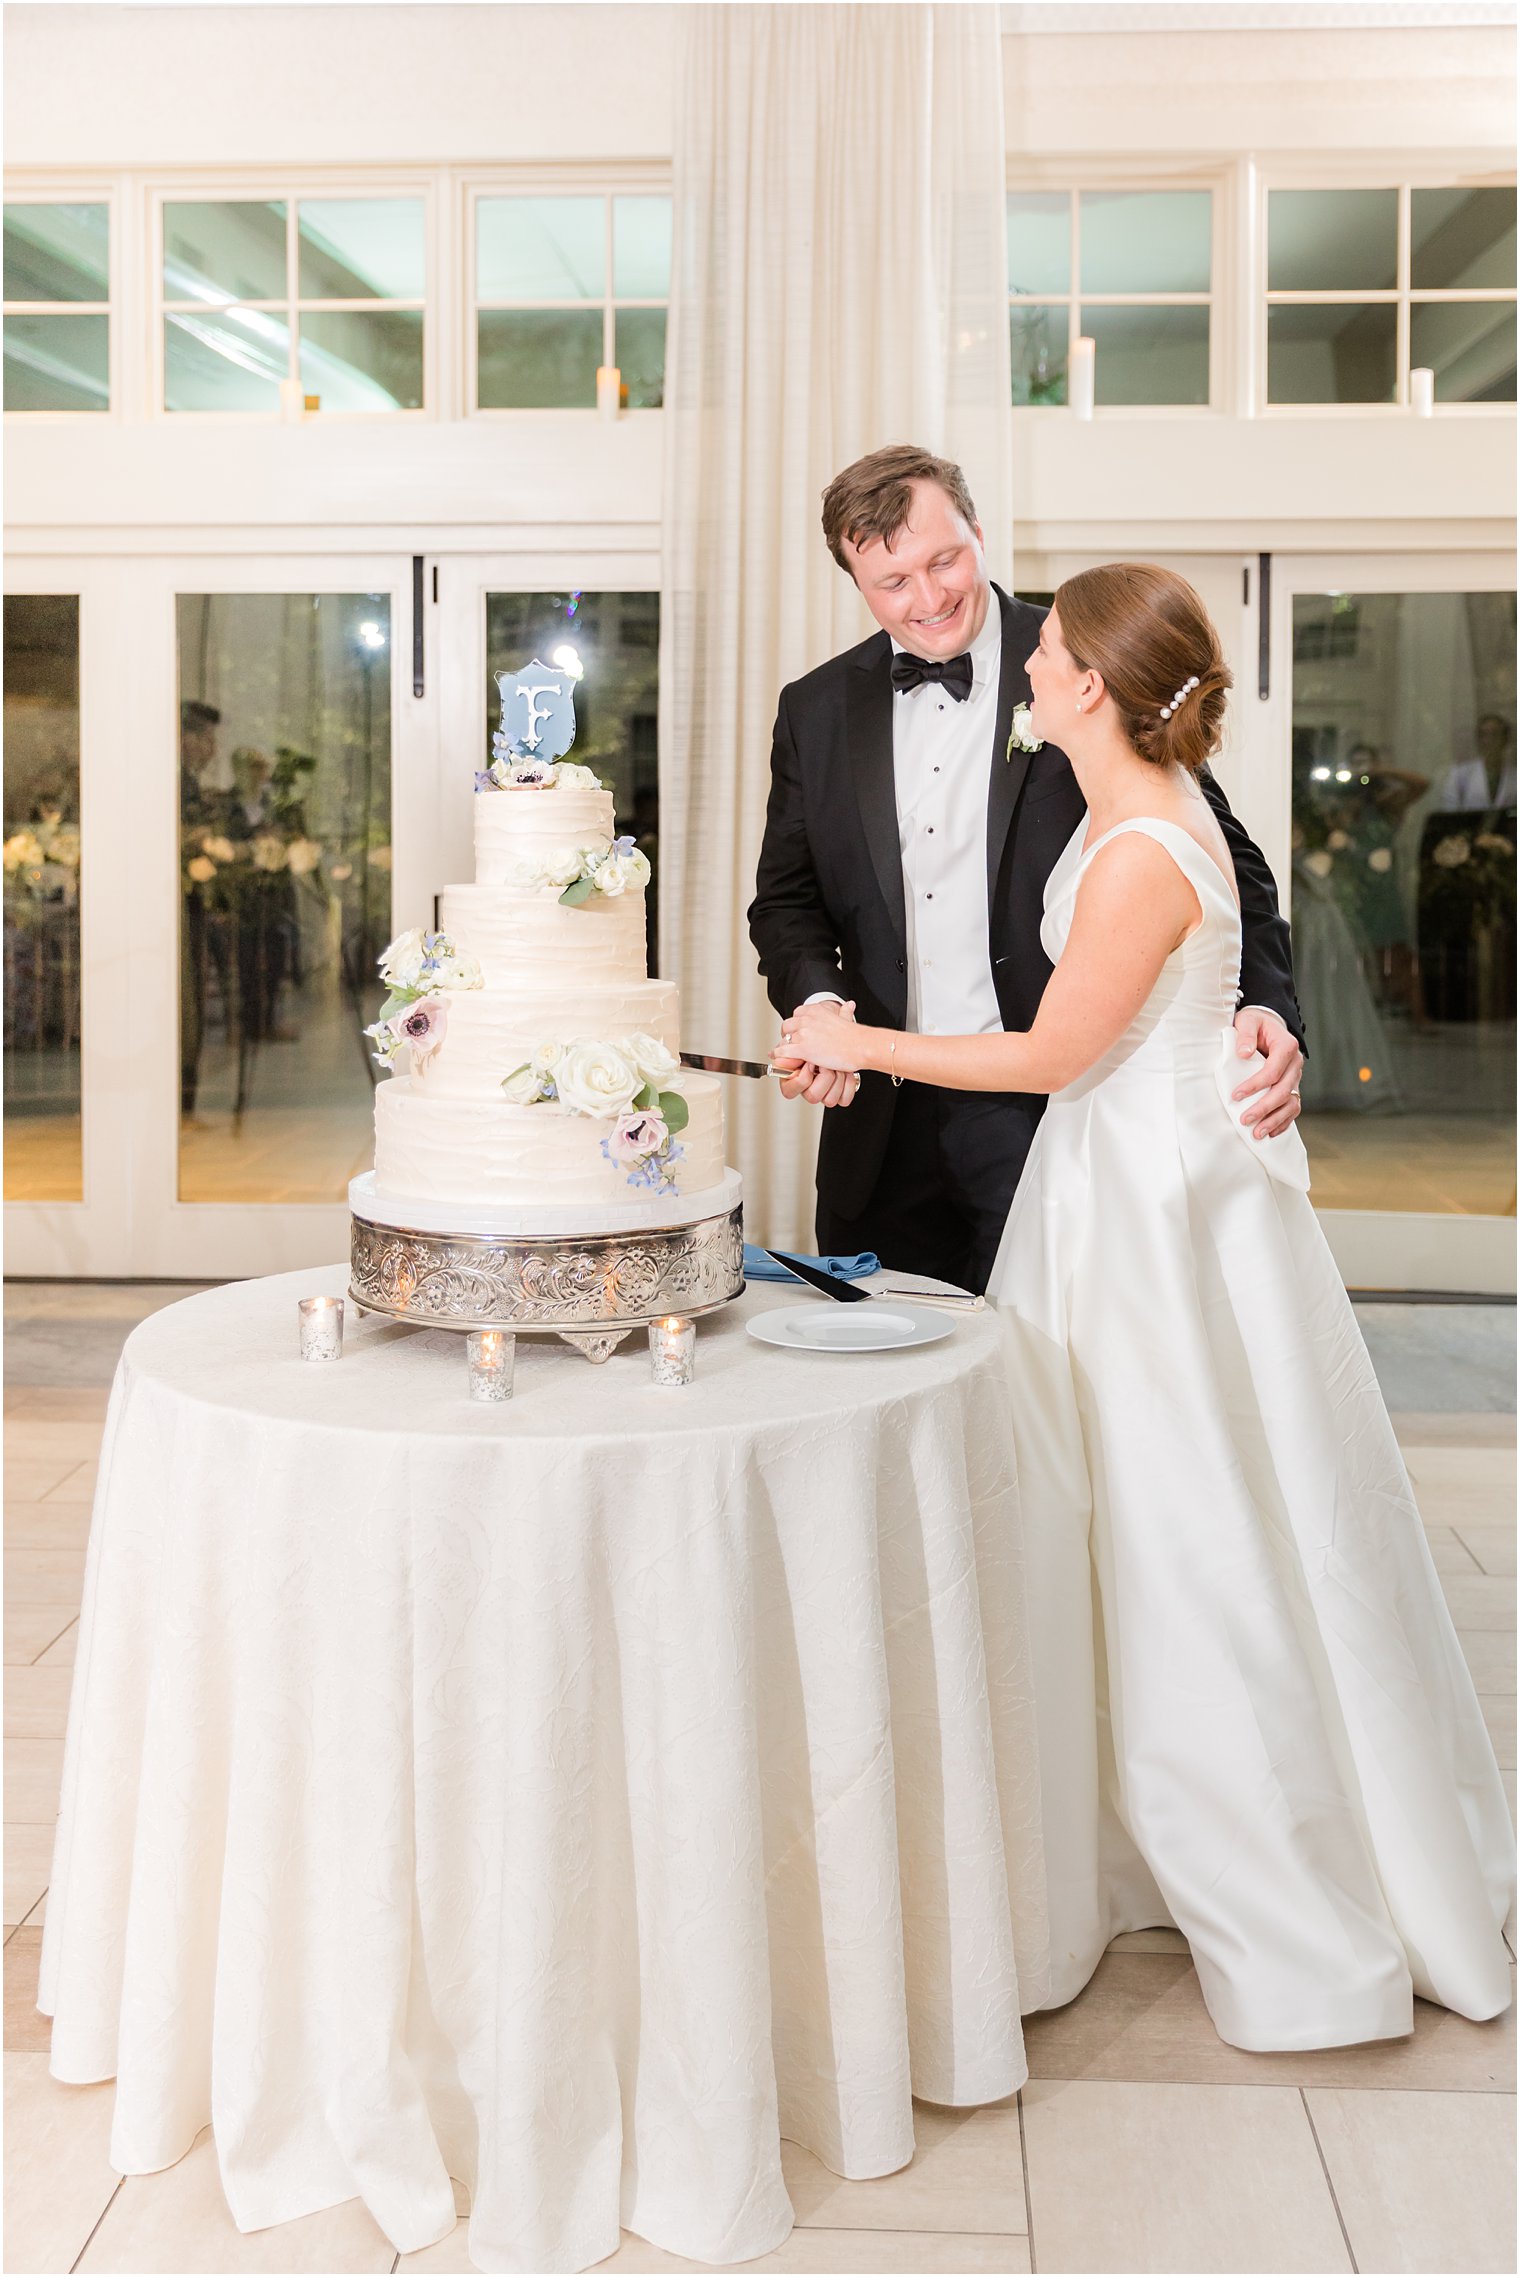 newlyweds cut wedding cake during NJ wedding reception